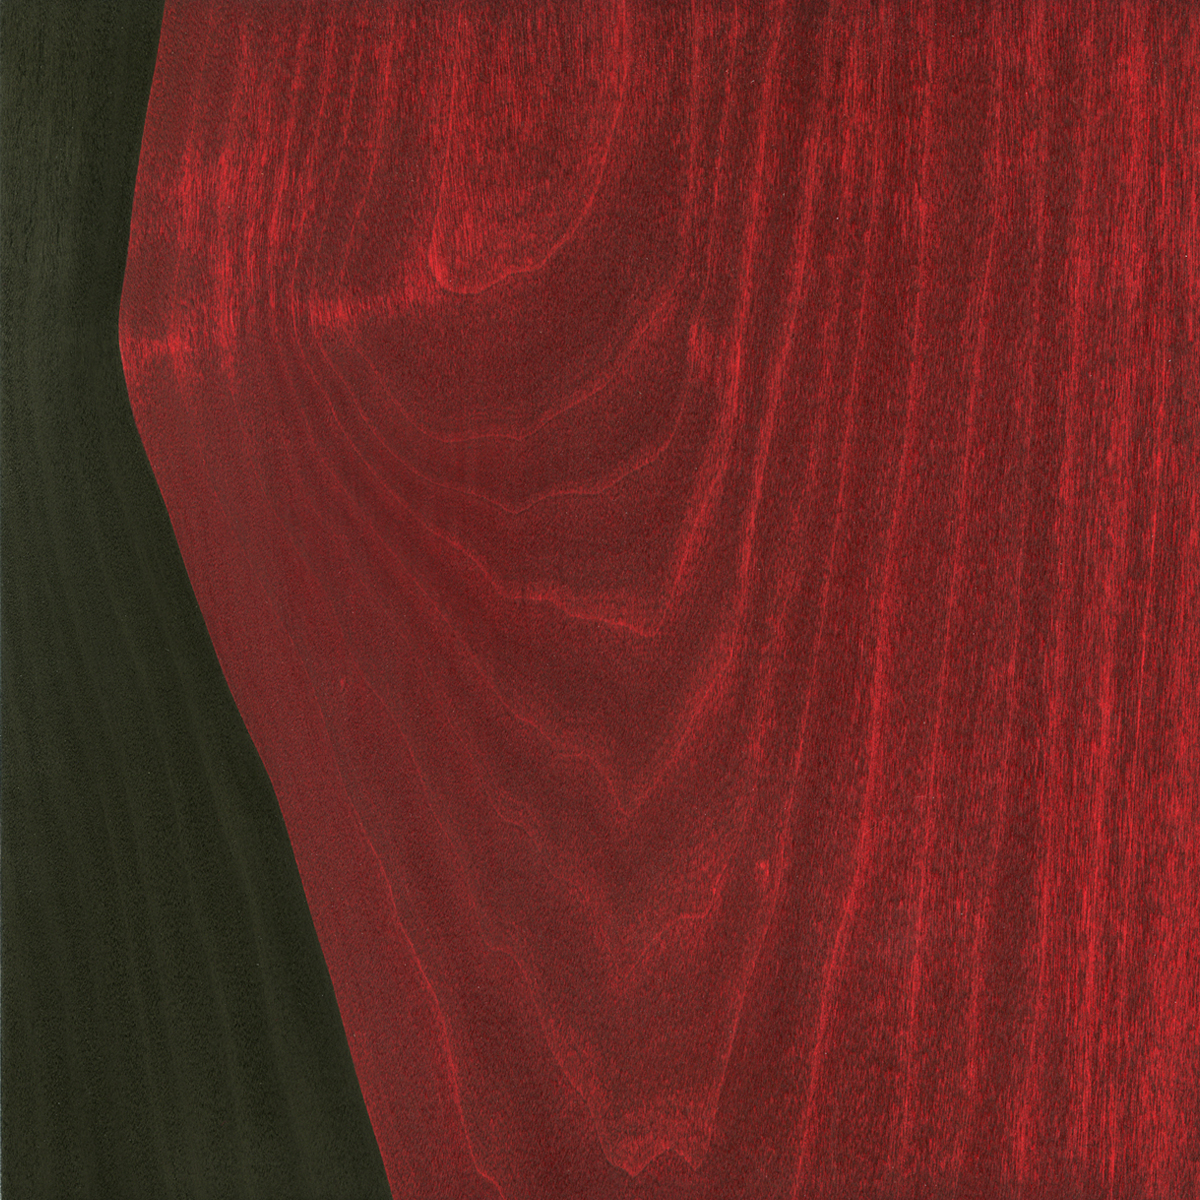     Flow  &nbsp;  Gouache / Ink / Wood   8 .875 ” x 8 .875 ” x 1” 2014   